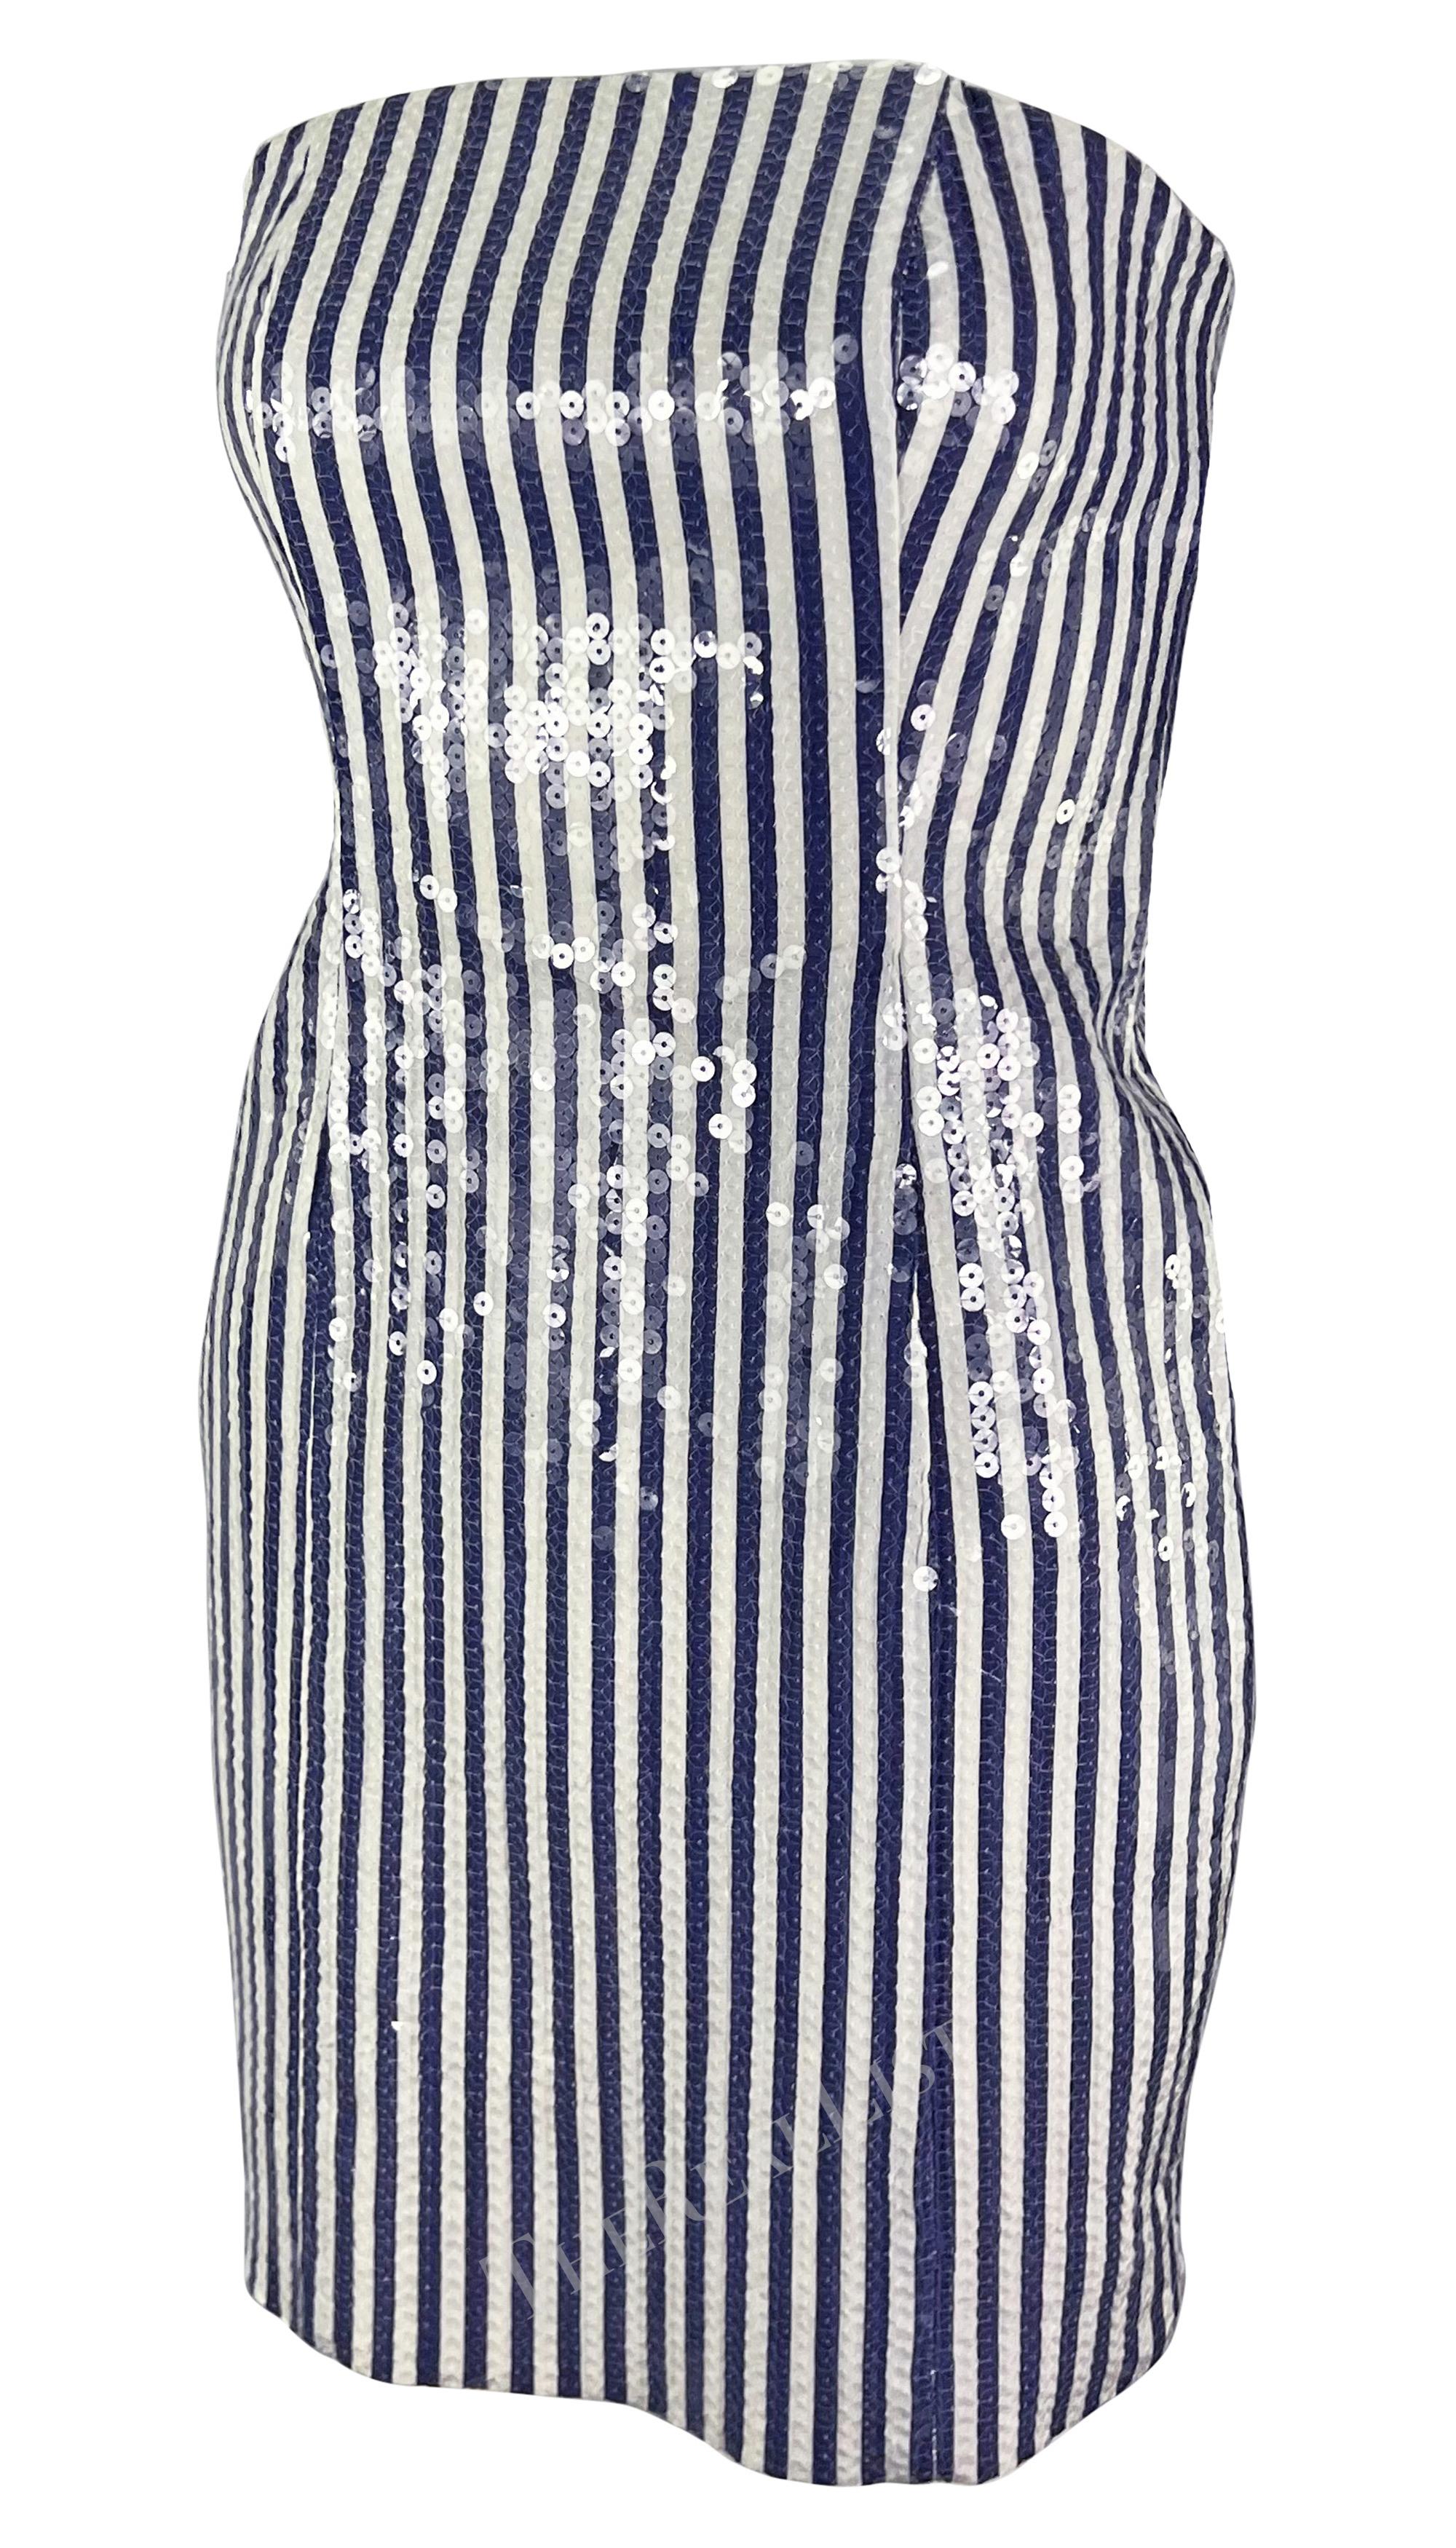 S/S 1990 Michael Kors Runway Blue White Sequin Striped Strapless Mini Dress For Sale 2